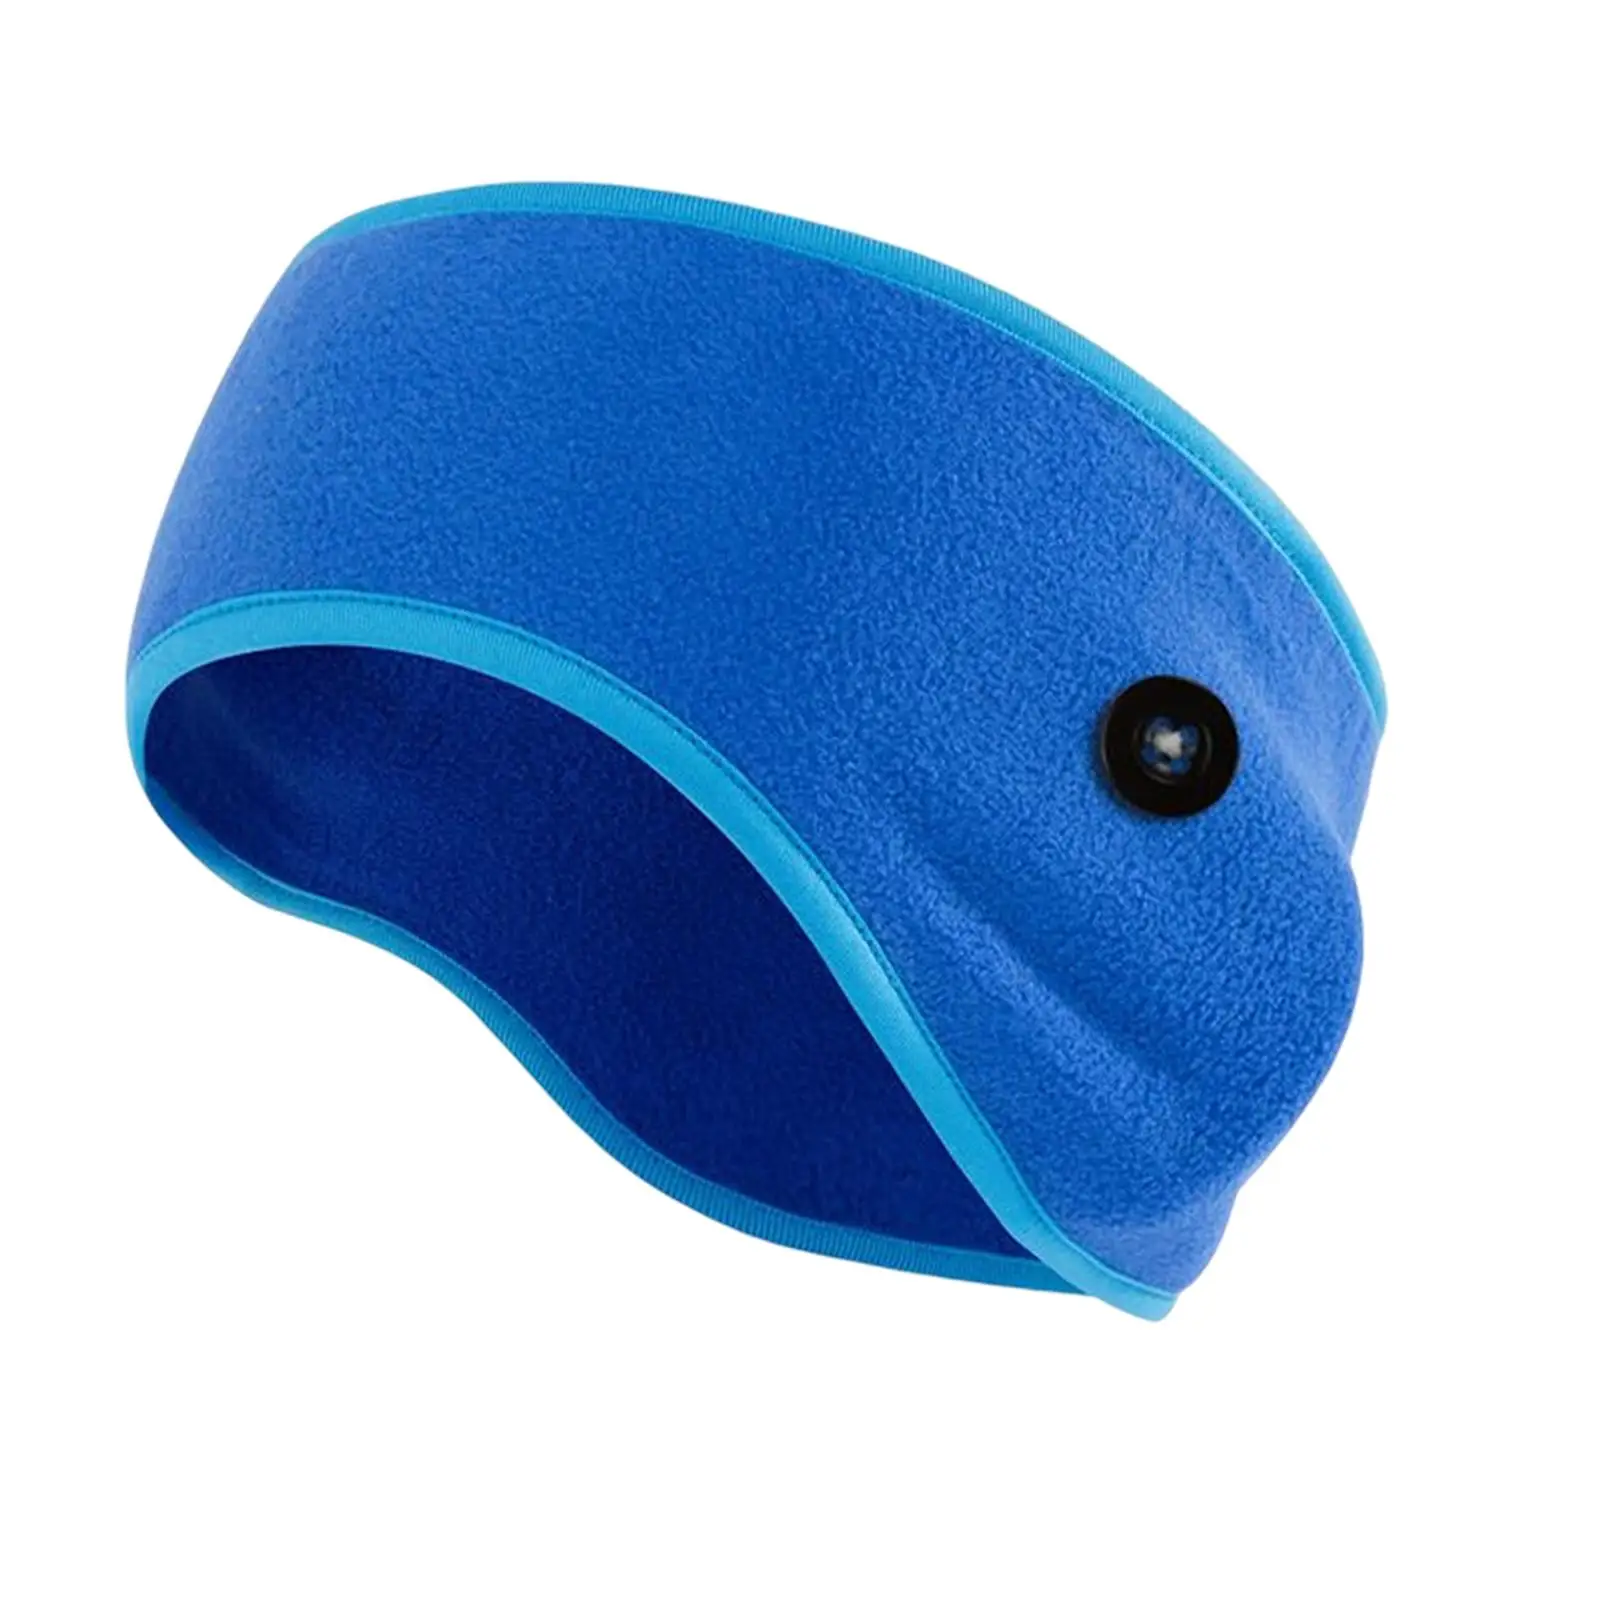 Ear Warmers Headband with Buttons Winter Earmuffs for Riding Climbing Yoga